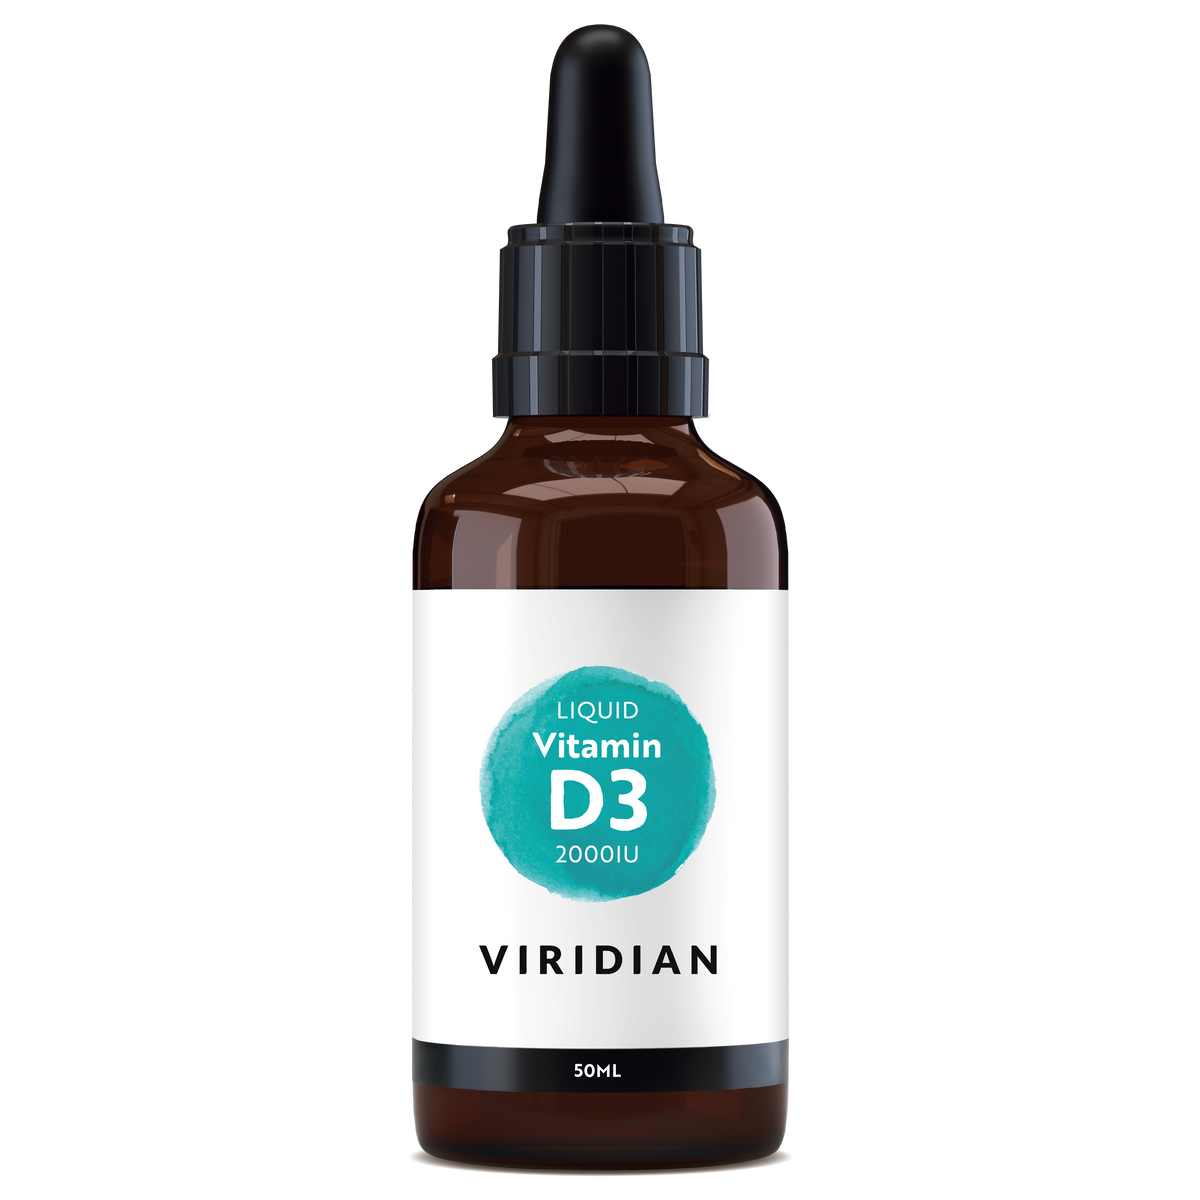 Viridian Liquid Vitamin D3 2000iu - 50ml's - Your Health Store